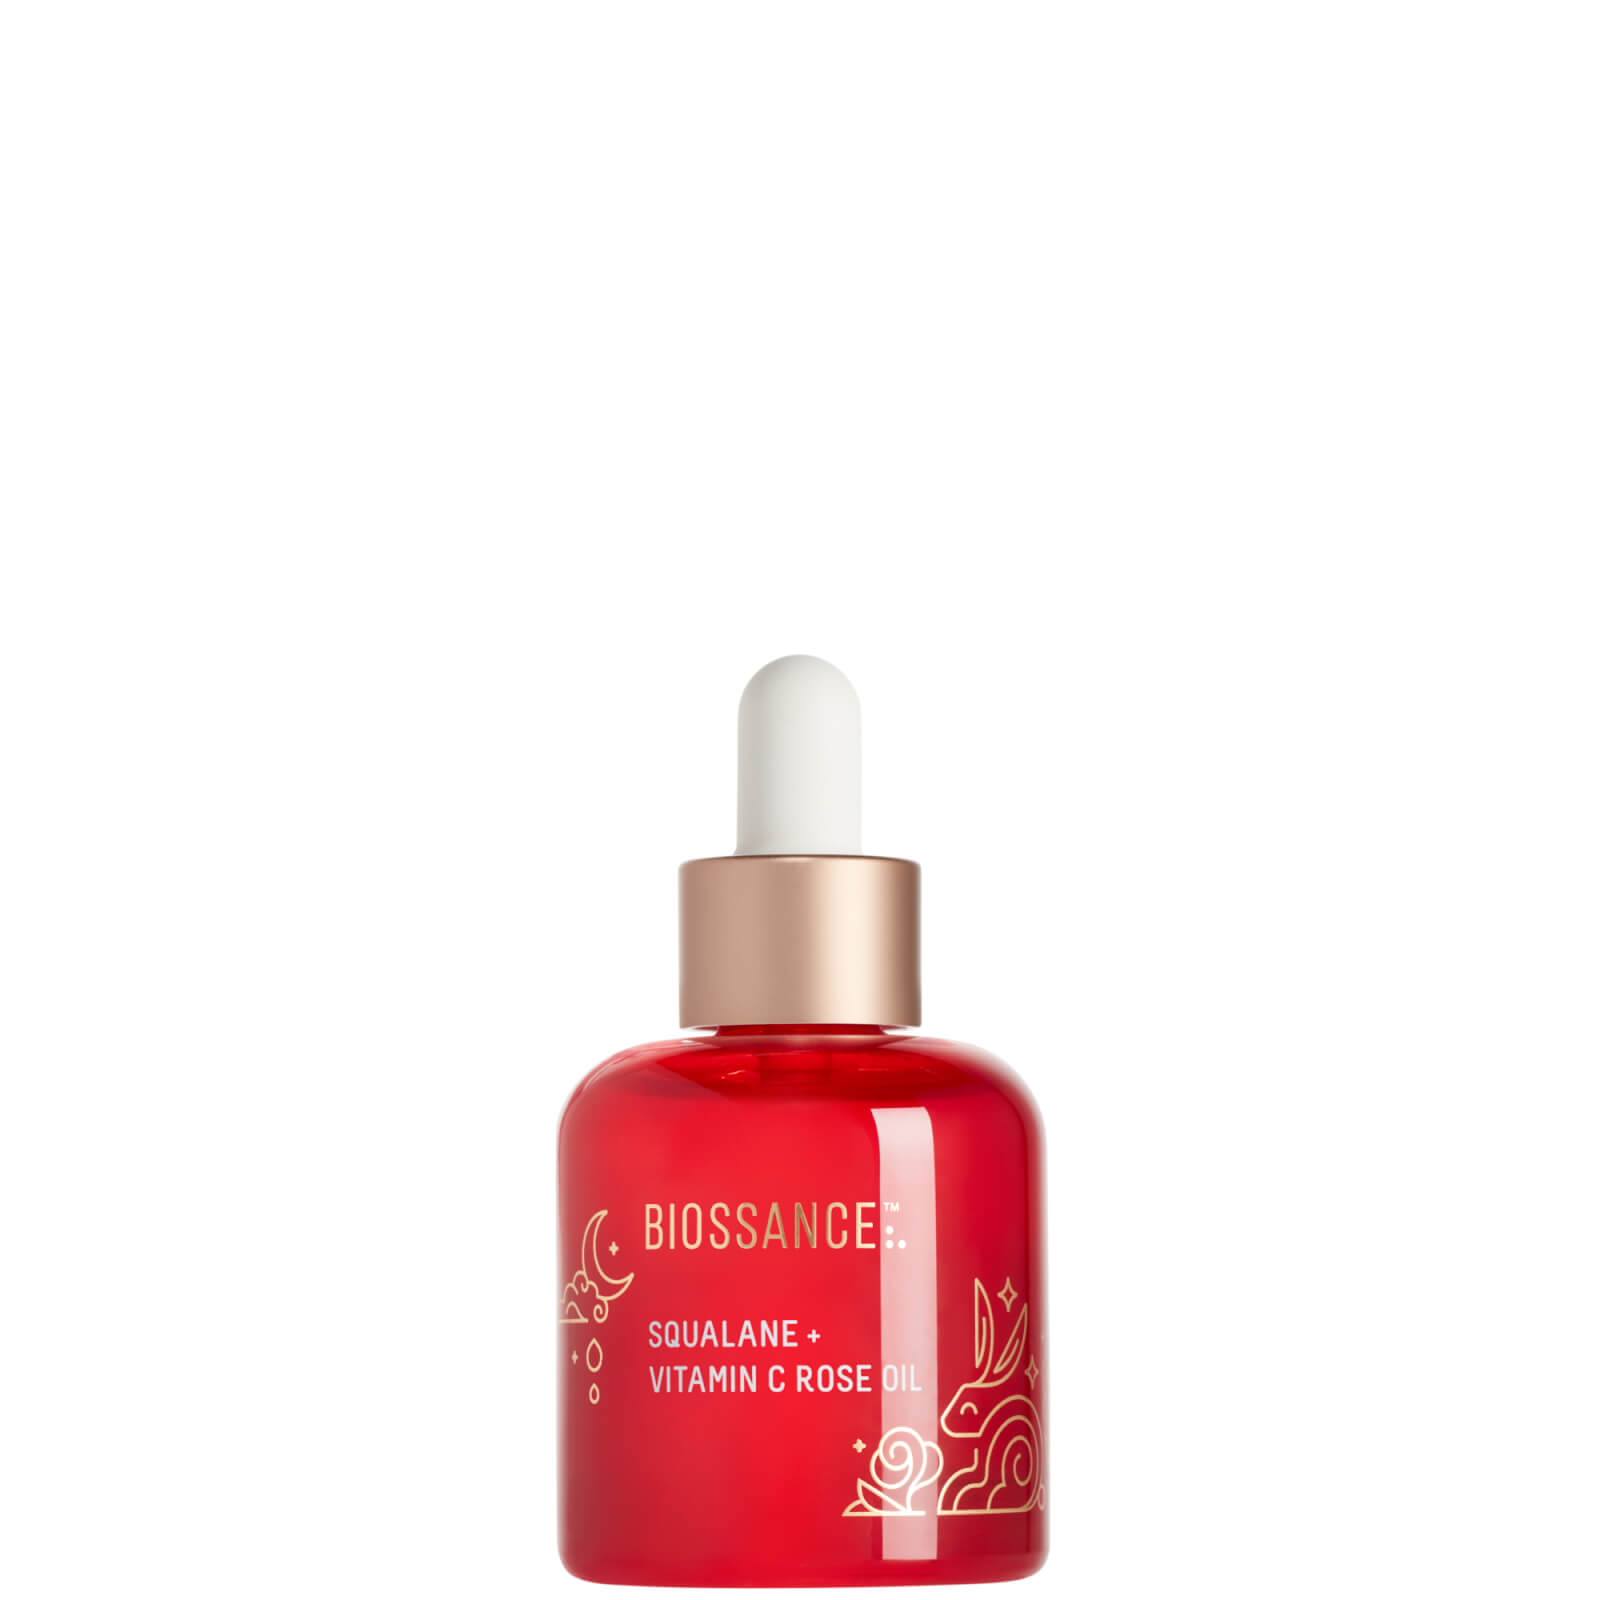 Biossance Squalane + Vitamin C Rose Oil 30ml In Red